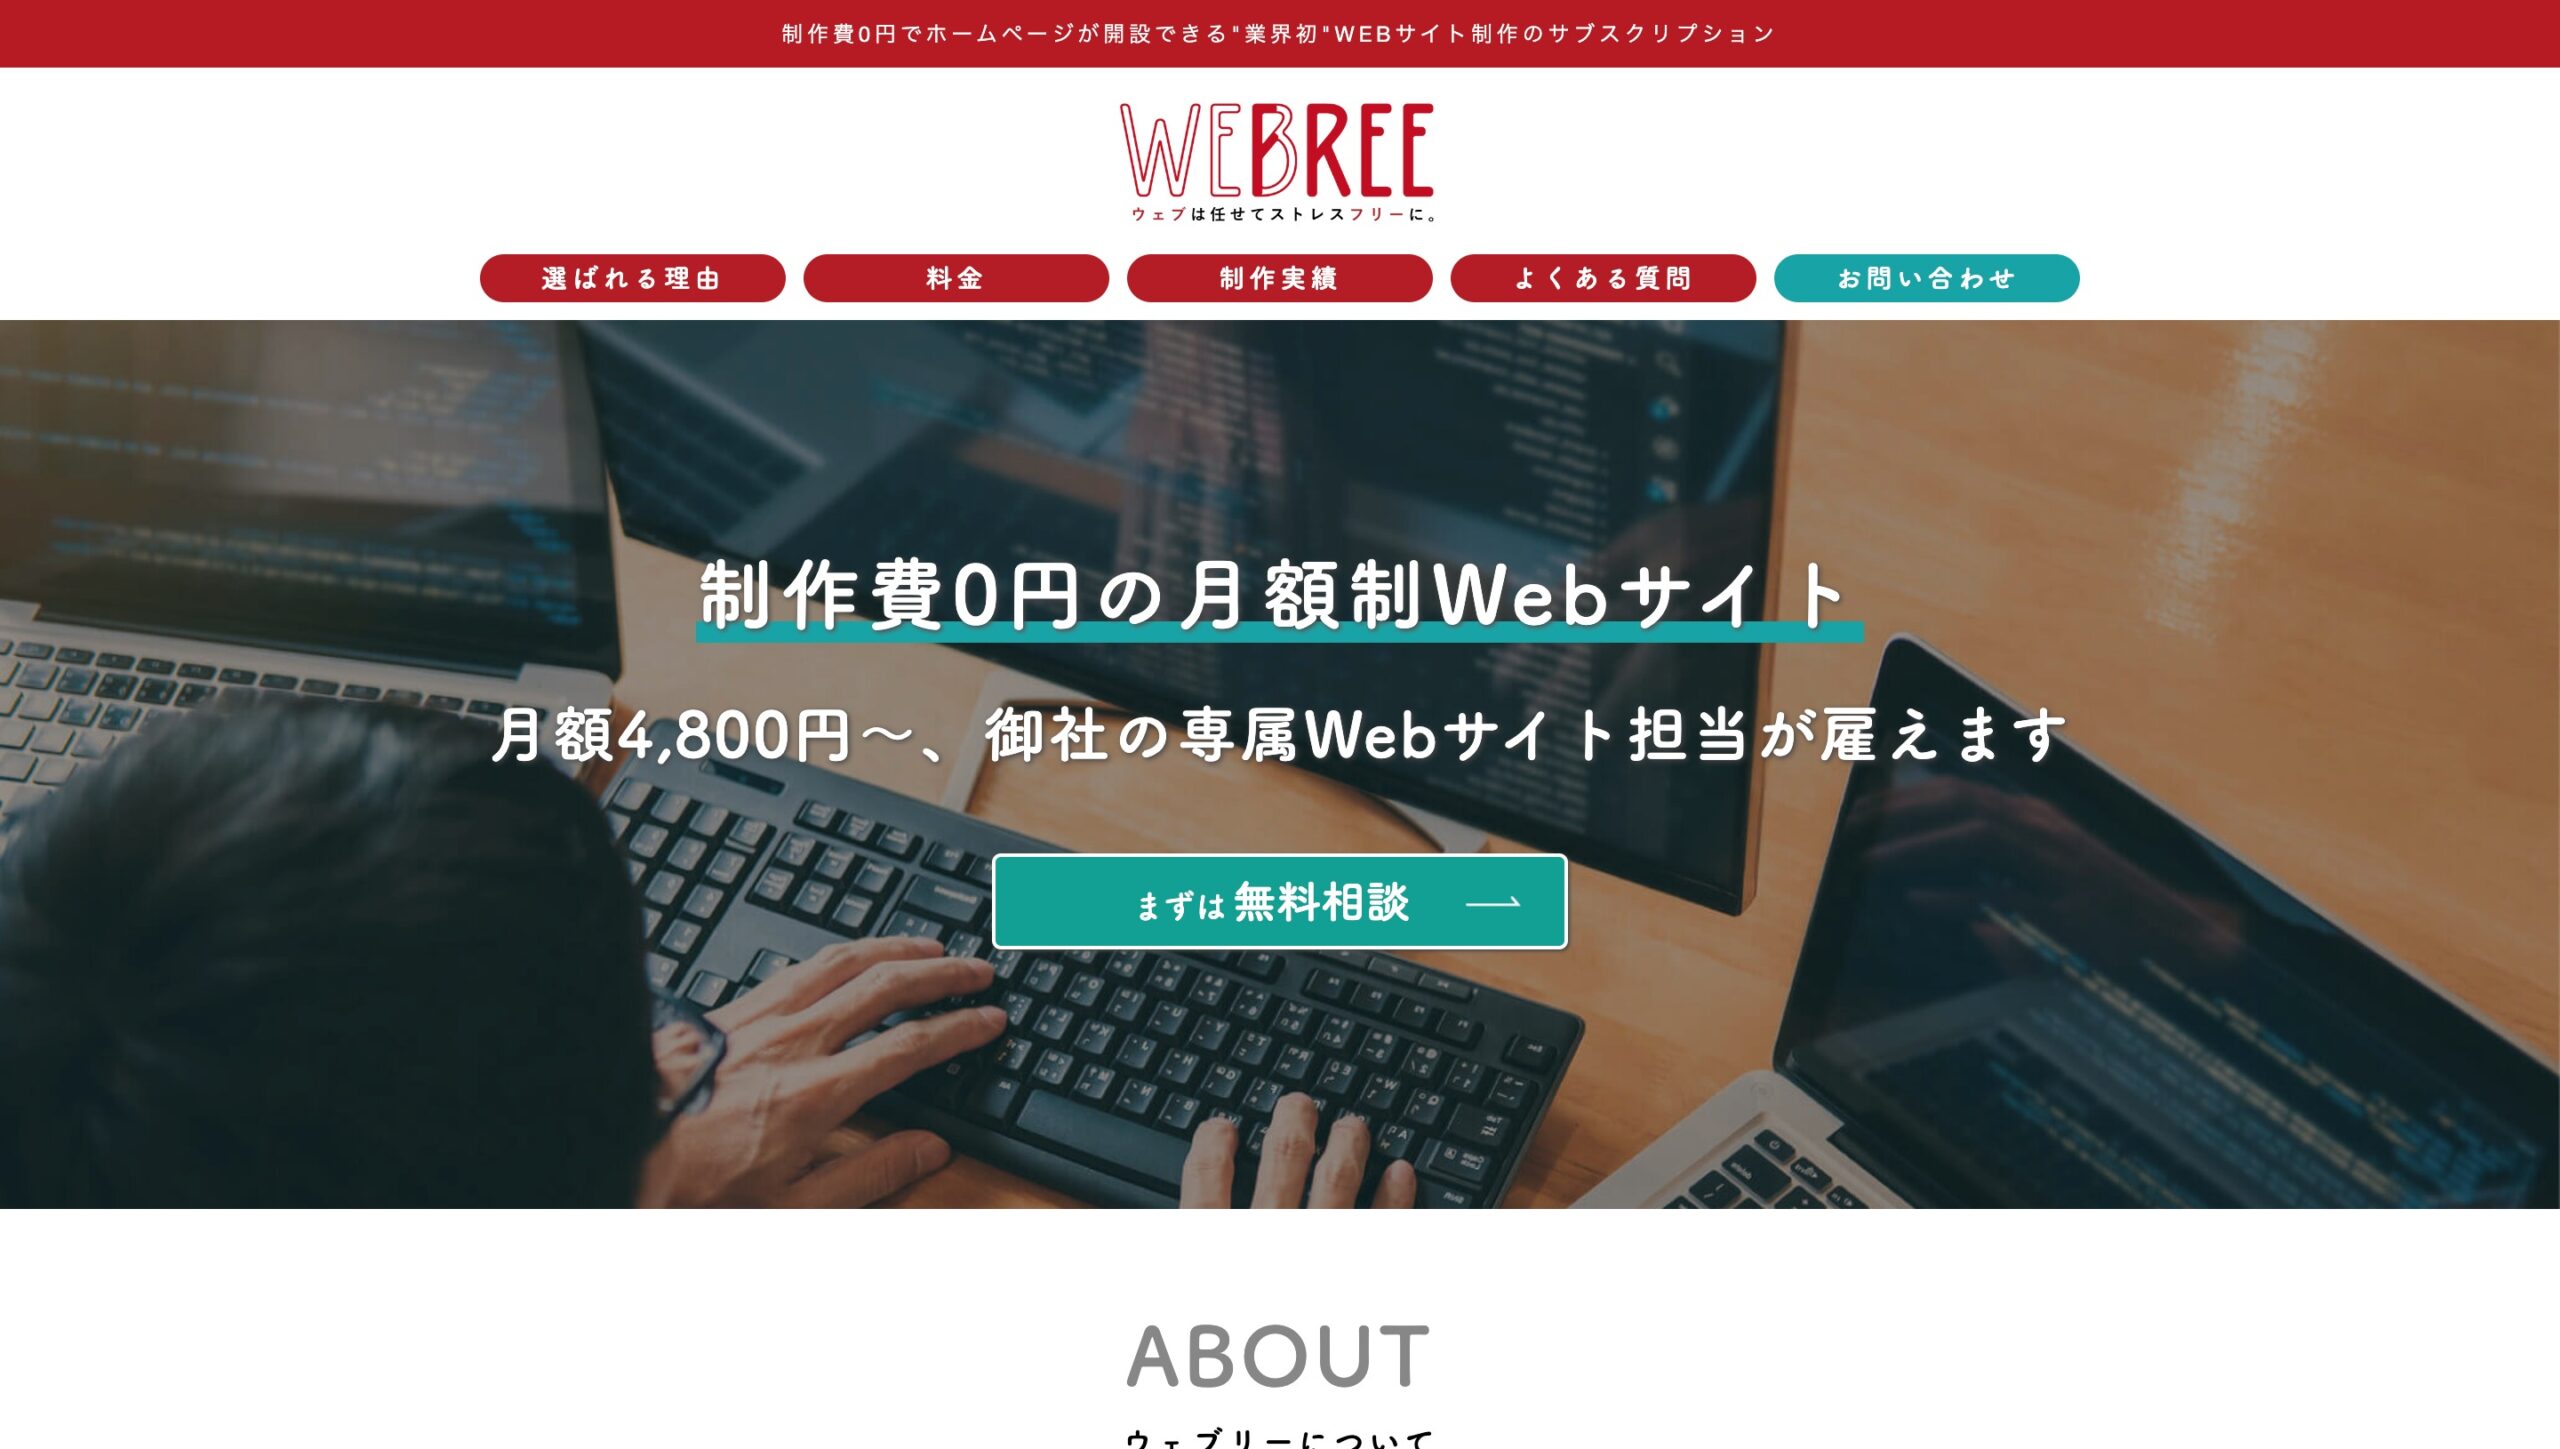 CREED BANK株式会社：WEBREE